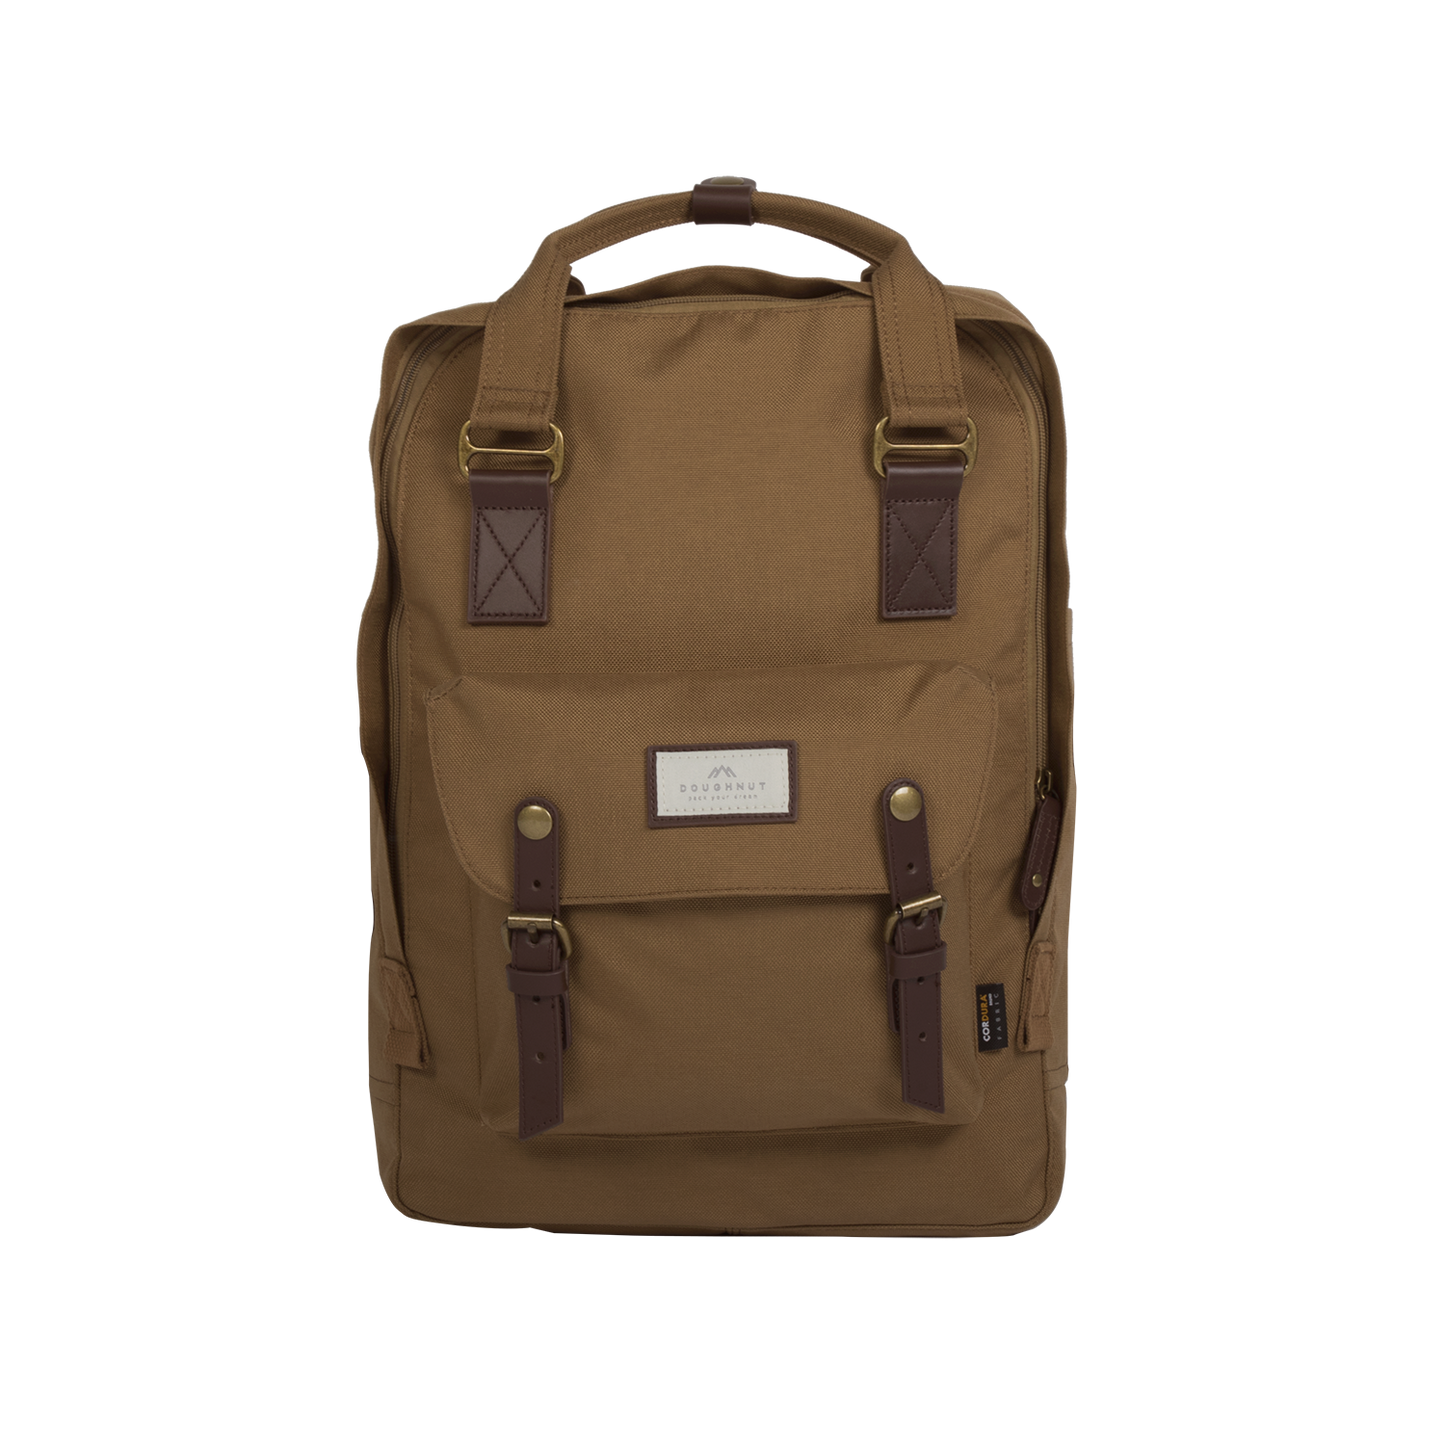 Macaroon Large Cordura Backpack